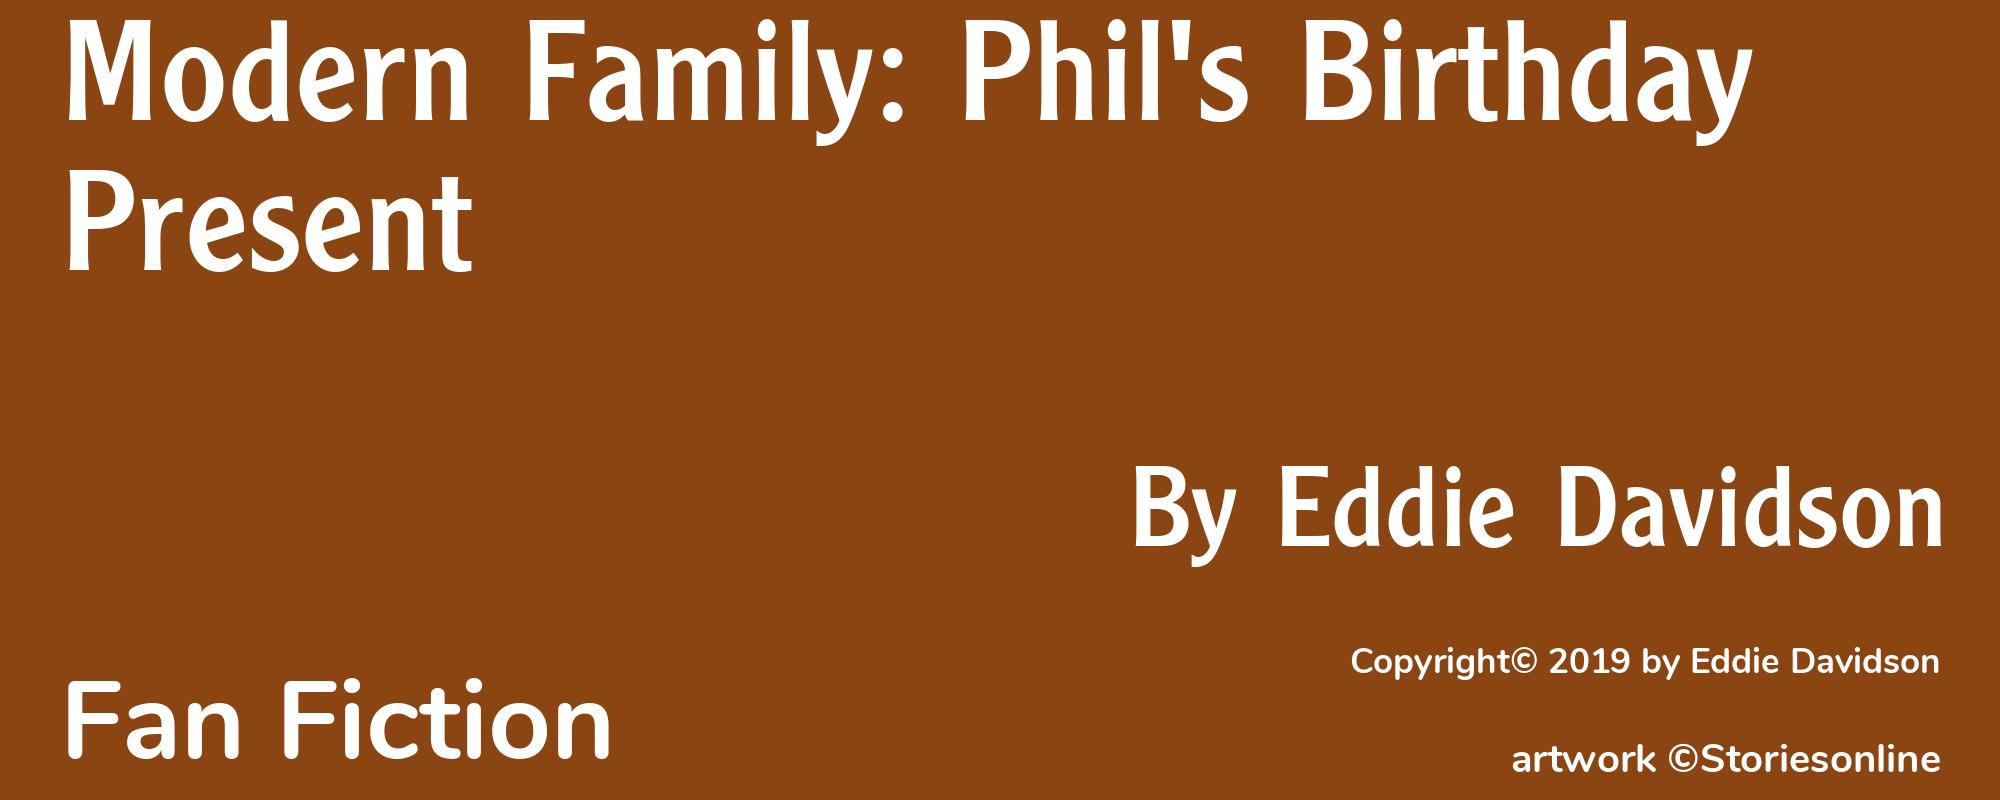 Modern Family: Phil's Birthday Present - Cover